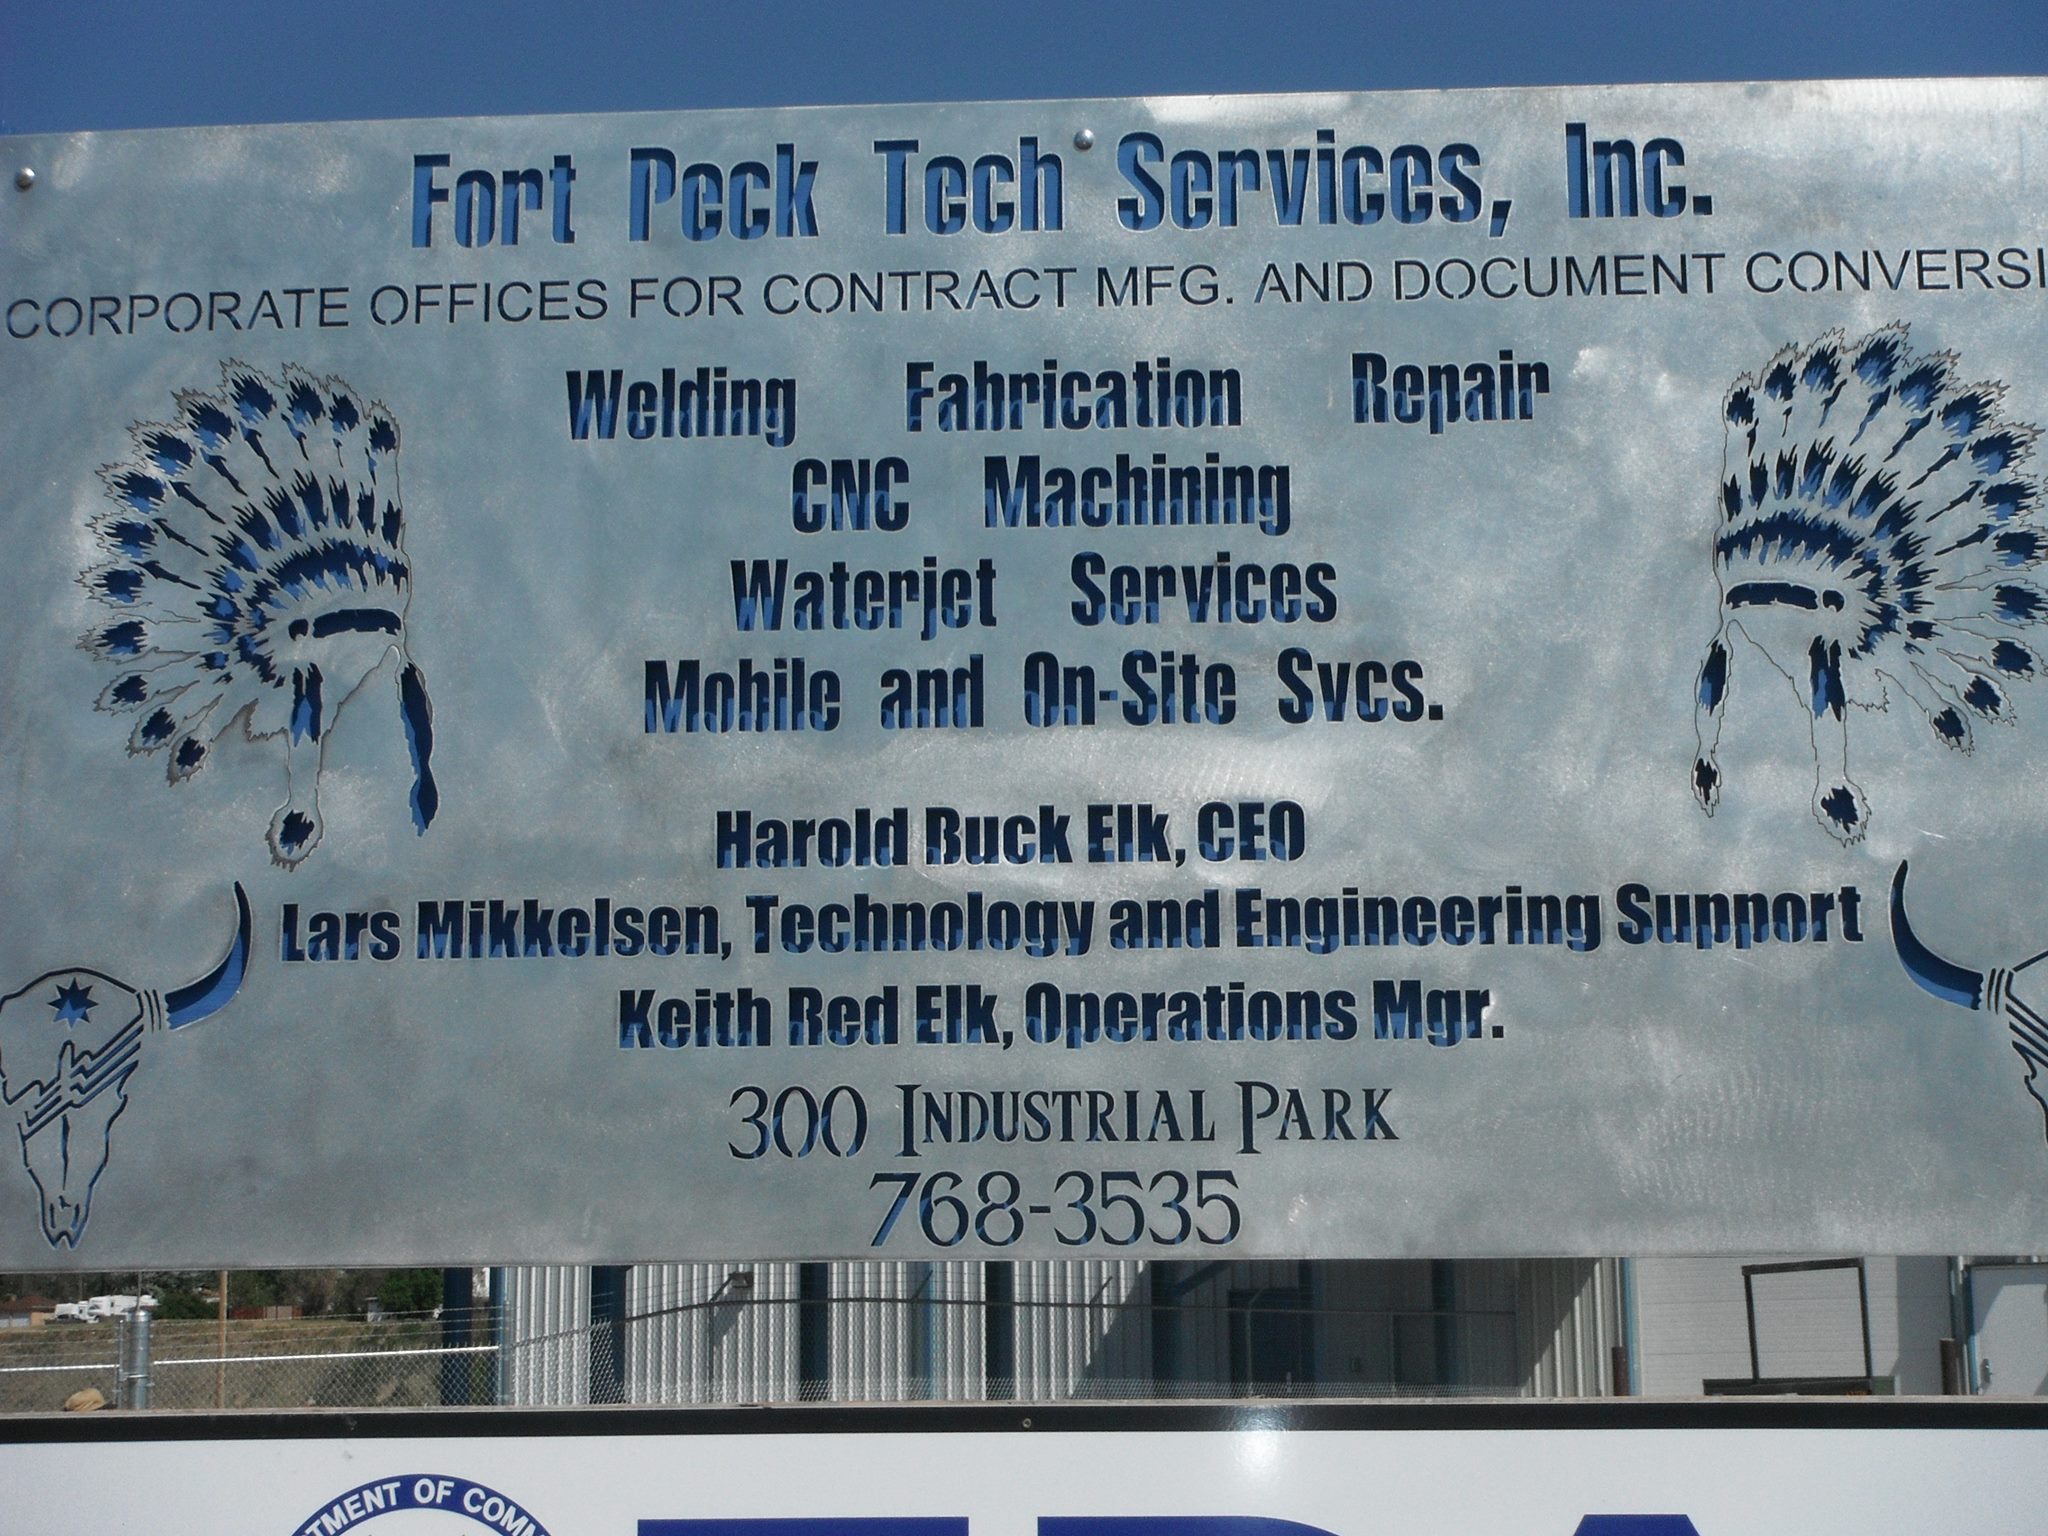 Fort Peck Tech Services logo